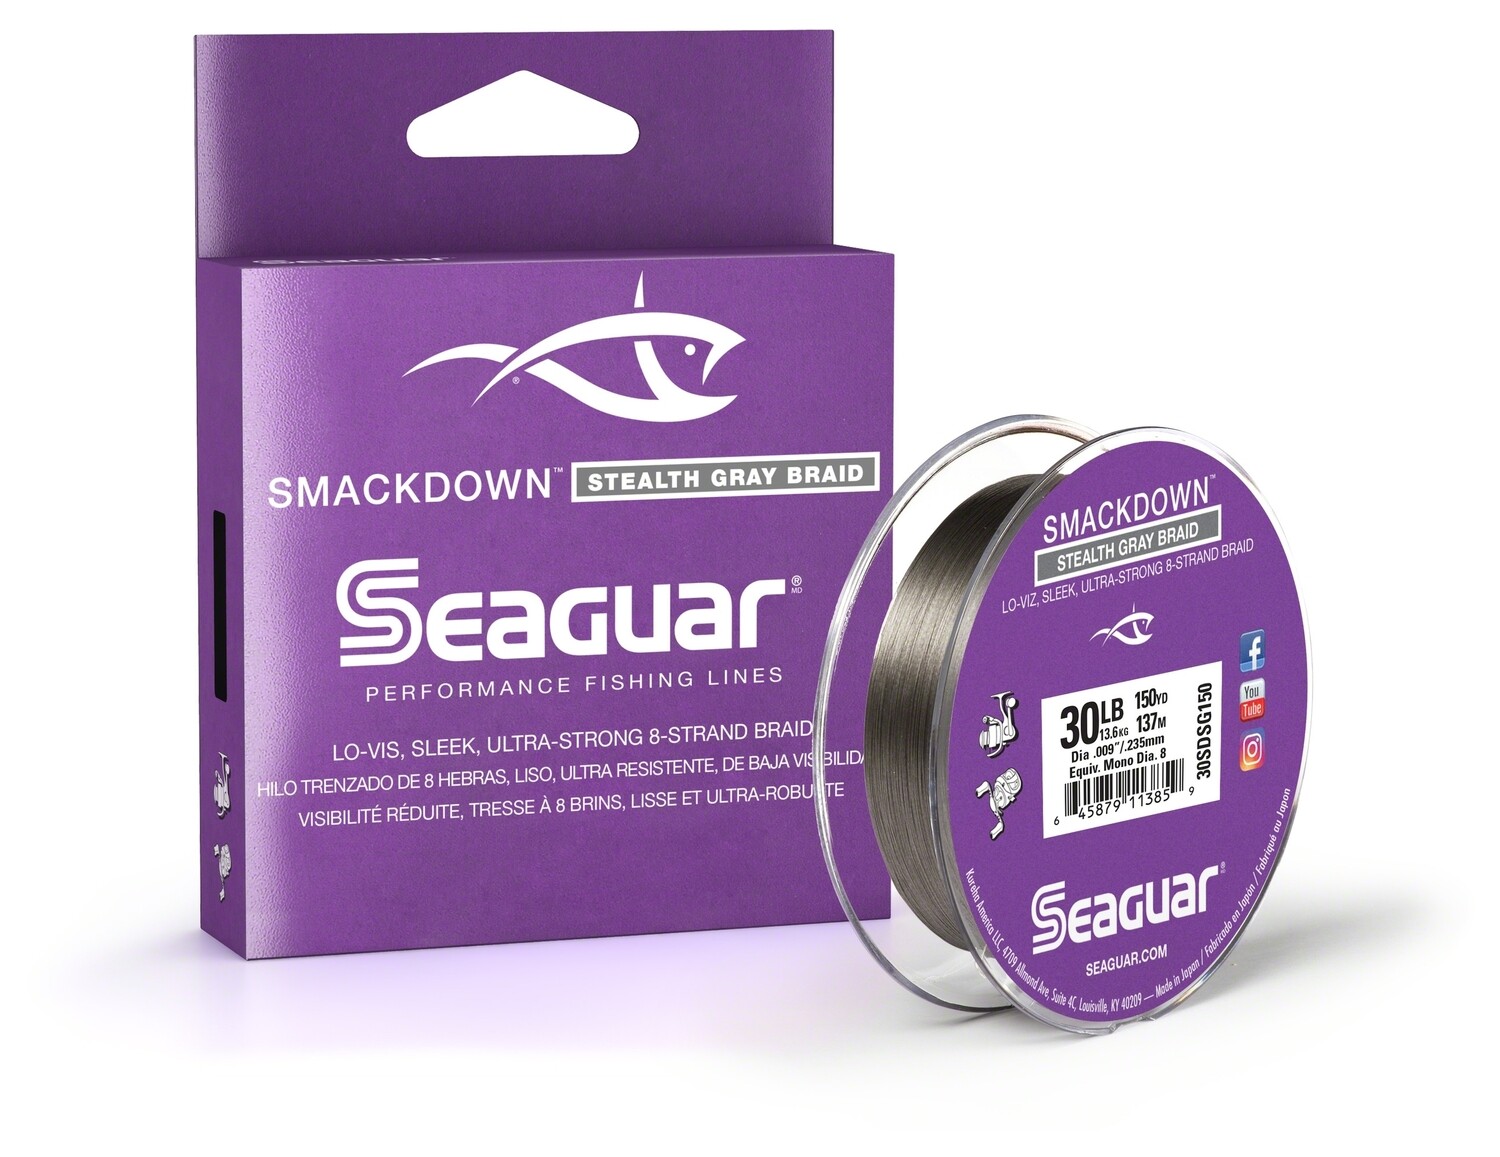 Seaguar Smackdown Braid 40 lb Stealth Gray 150 yd